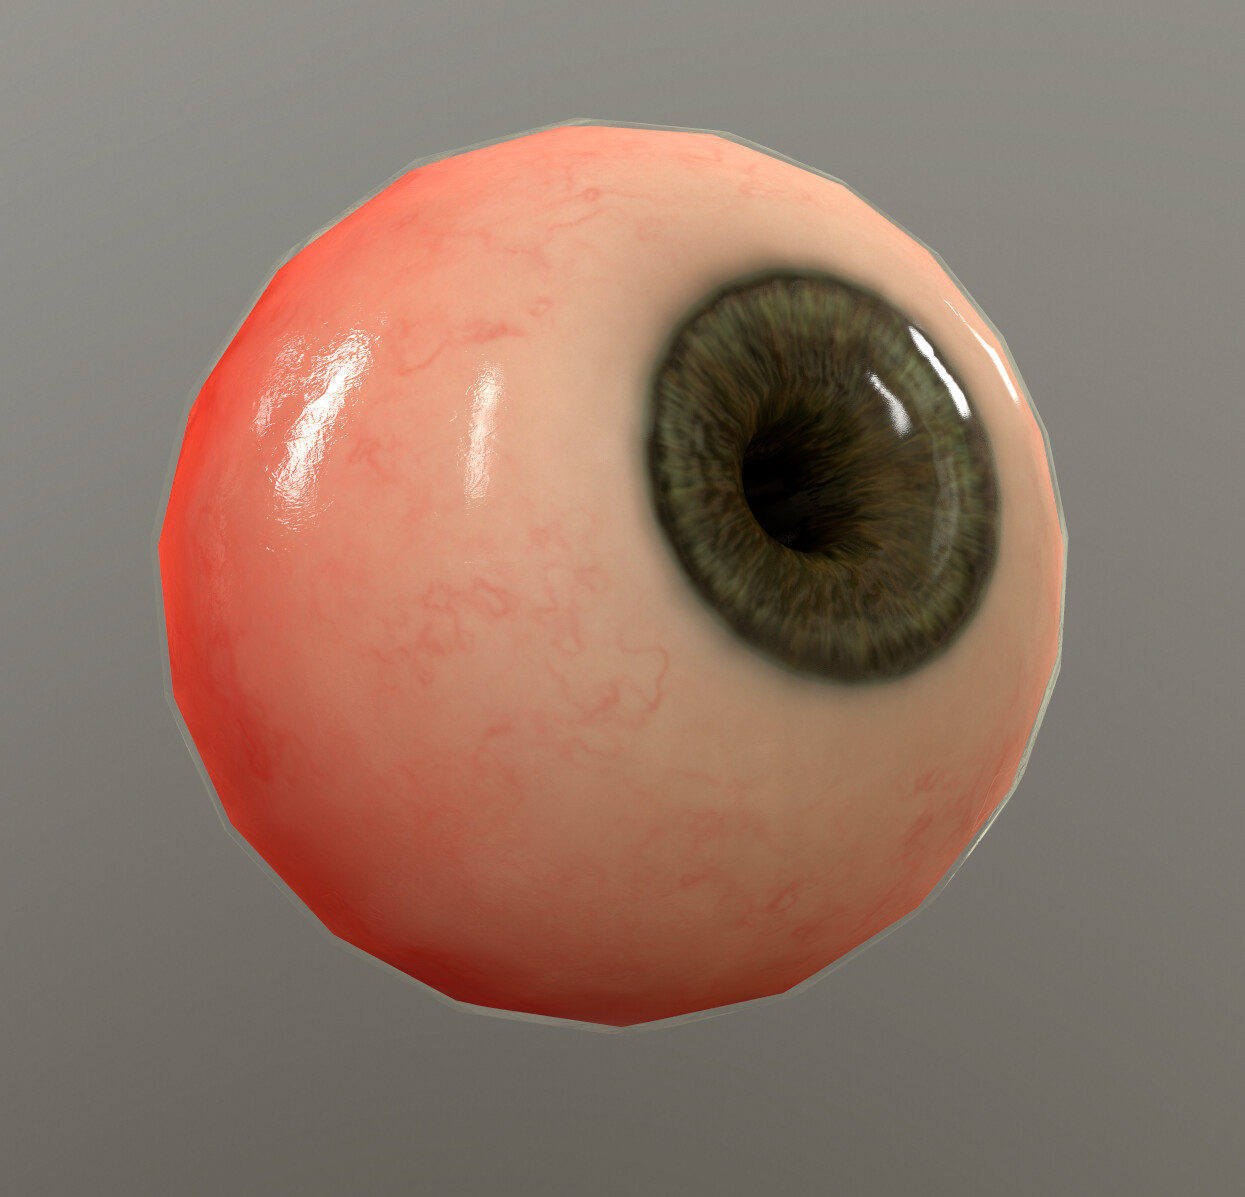 Eyeball Study